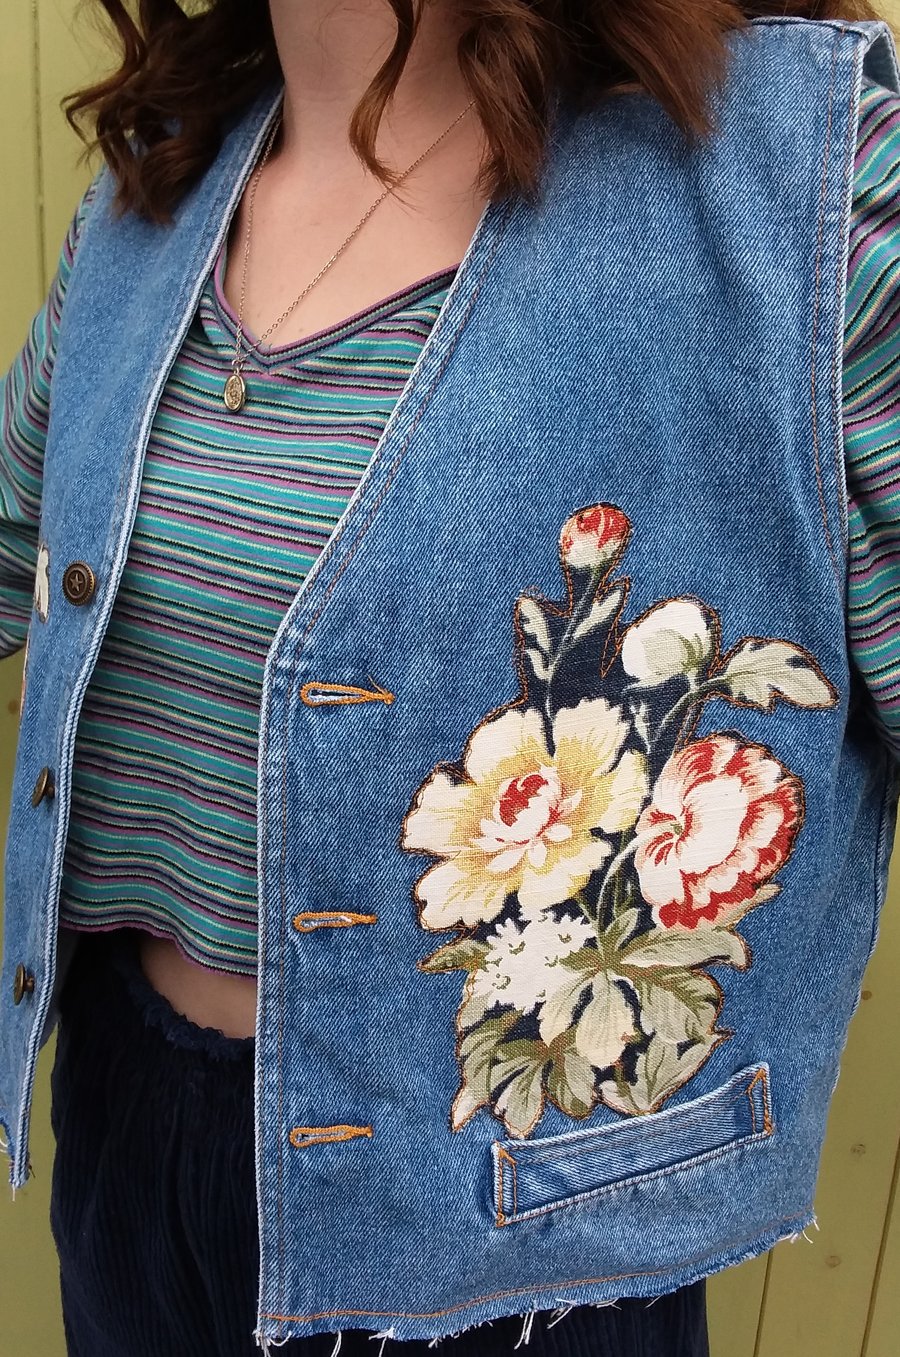 Upcycled denim waistcoat with flowers